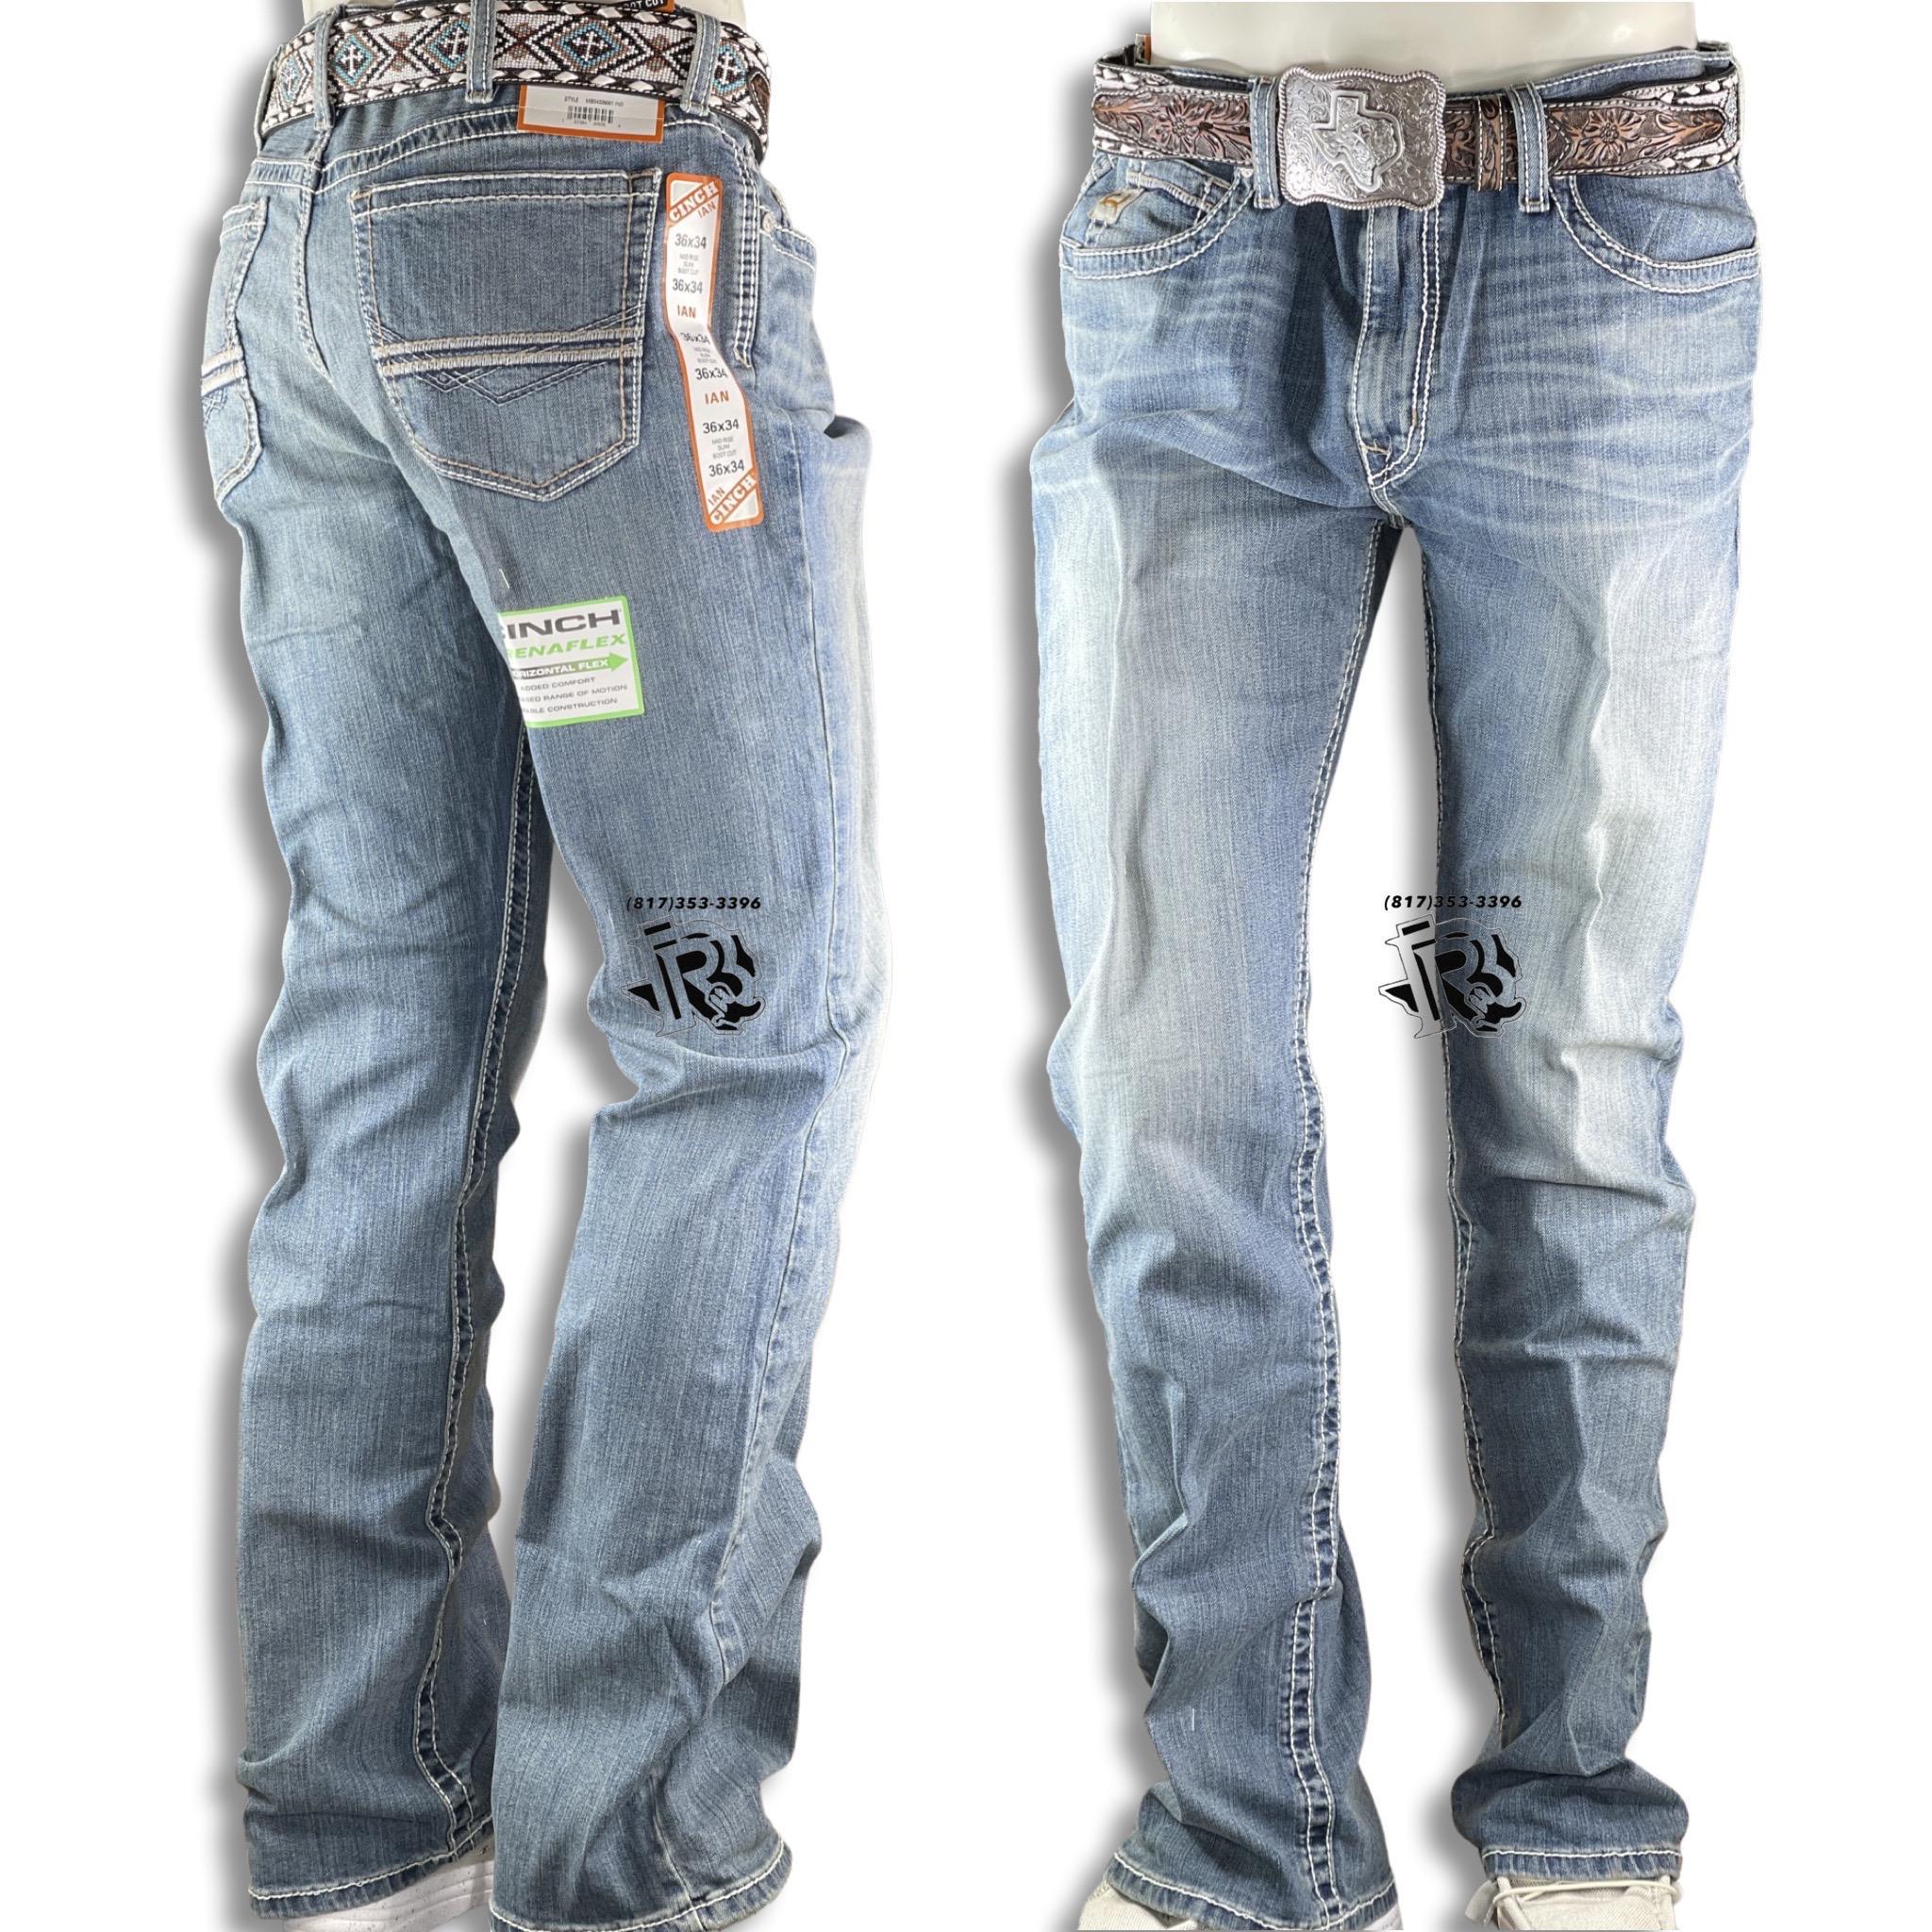 True Rock Mens Distressed Acid Washed Jeans Size 36x30 | eBay